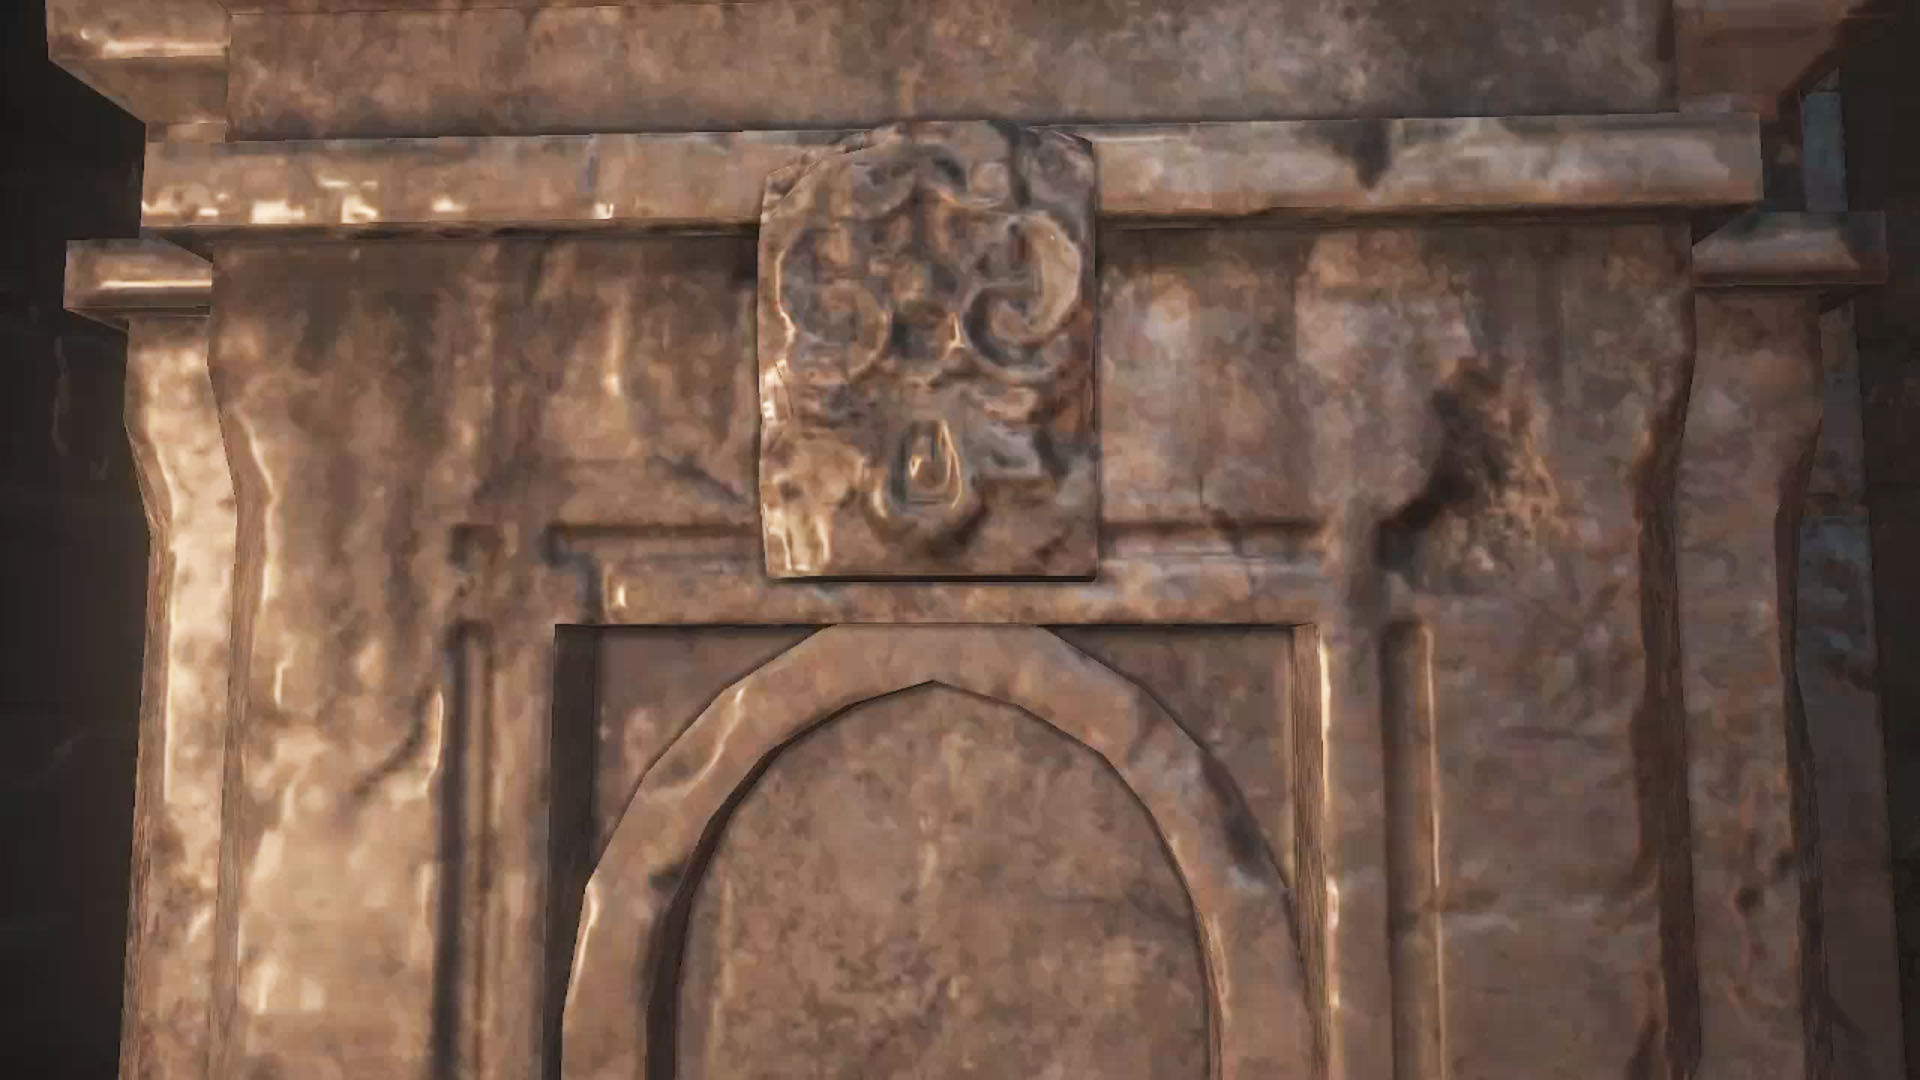 Dark Souls III: The Ringed City Символ на постаменте Кааса